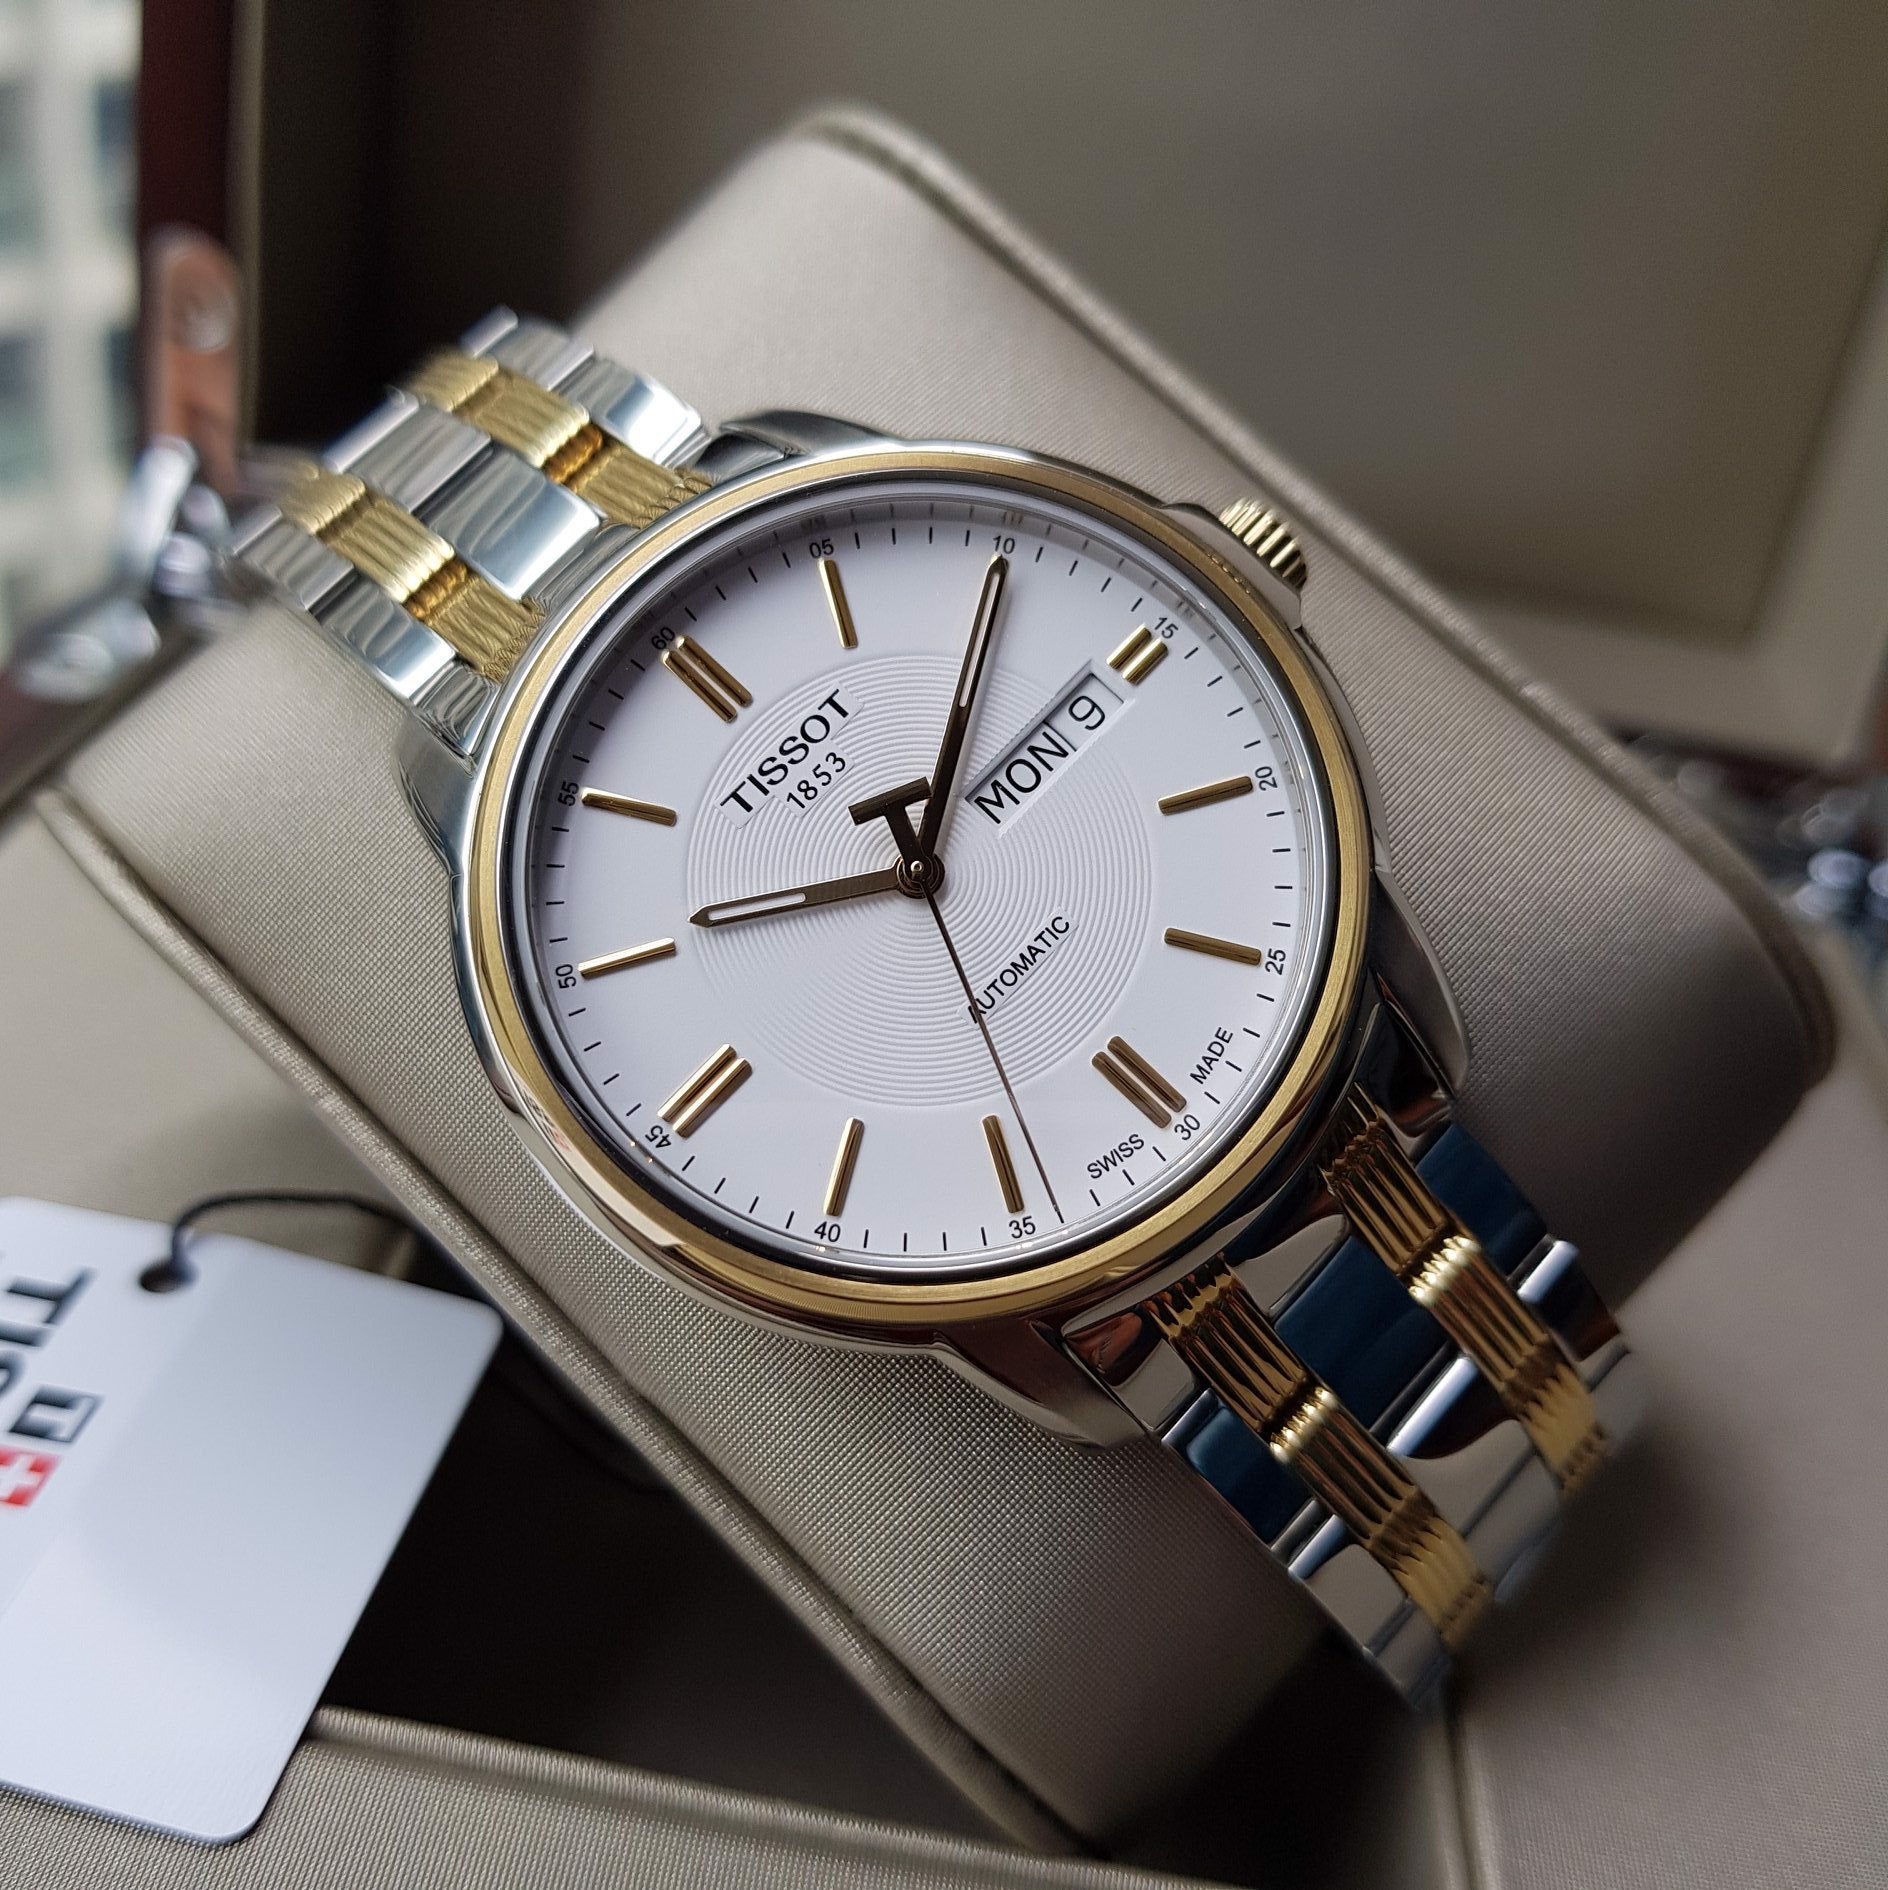 Tissot Swiss Made T-Classic III Automatic 2 Tone Gold Plated Men's Watch T0654302203100 - Prestige